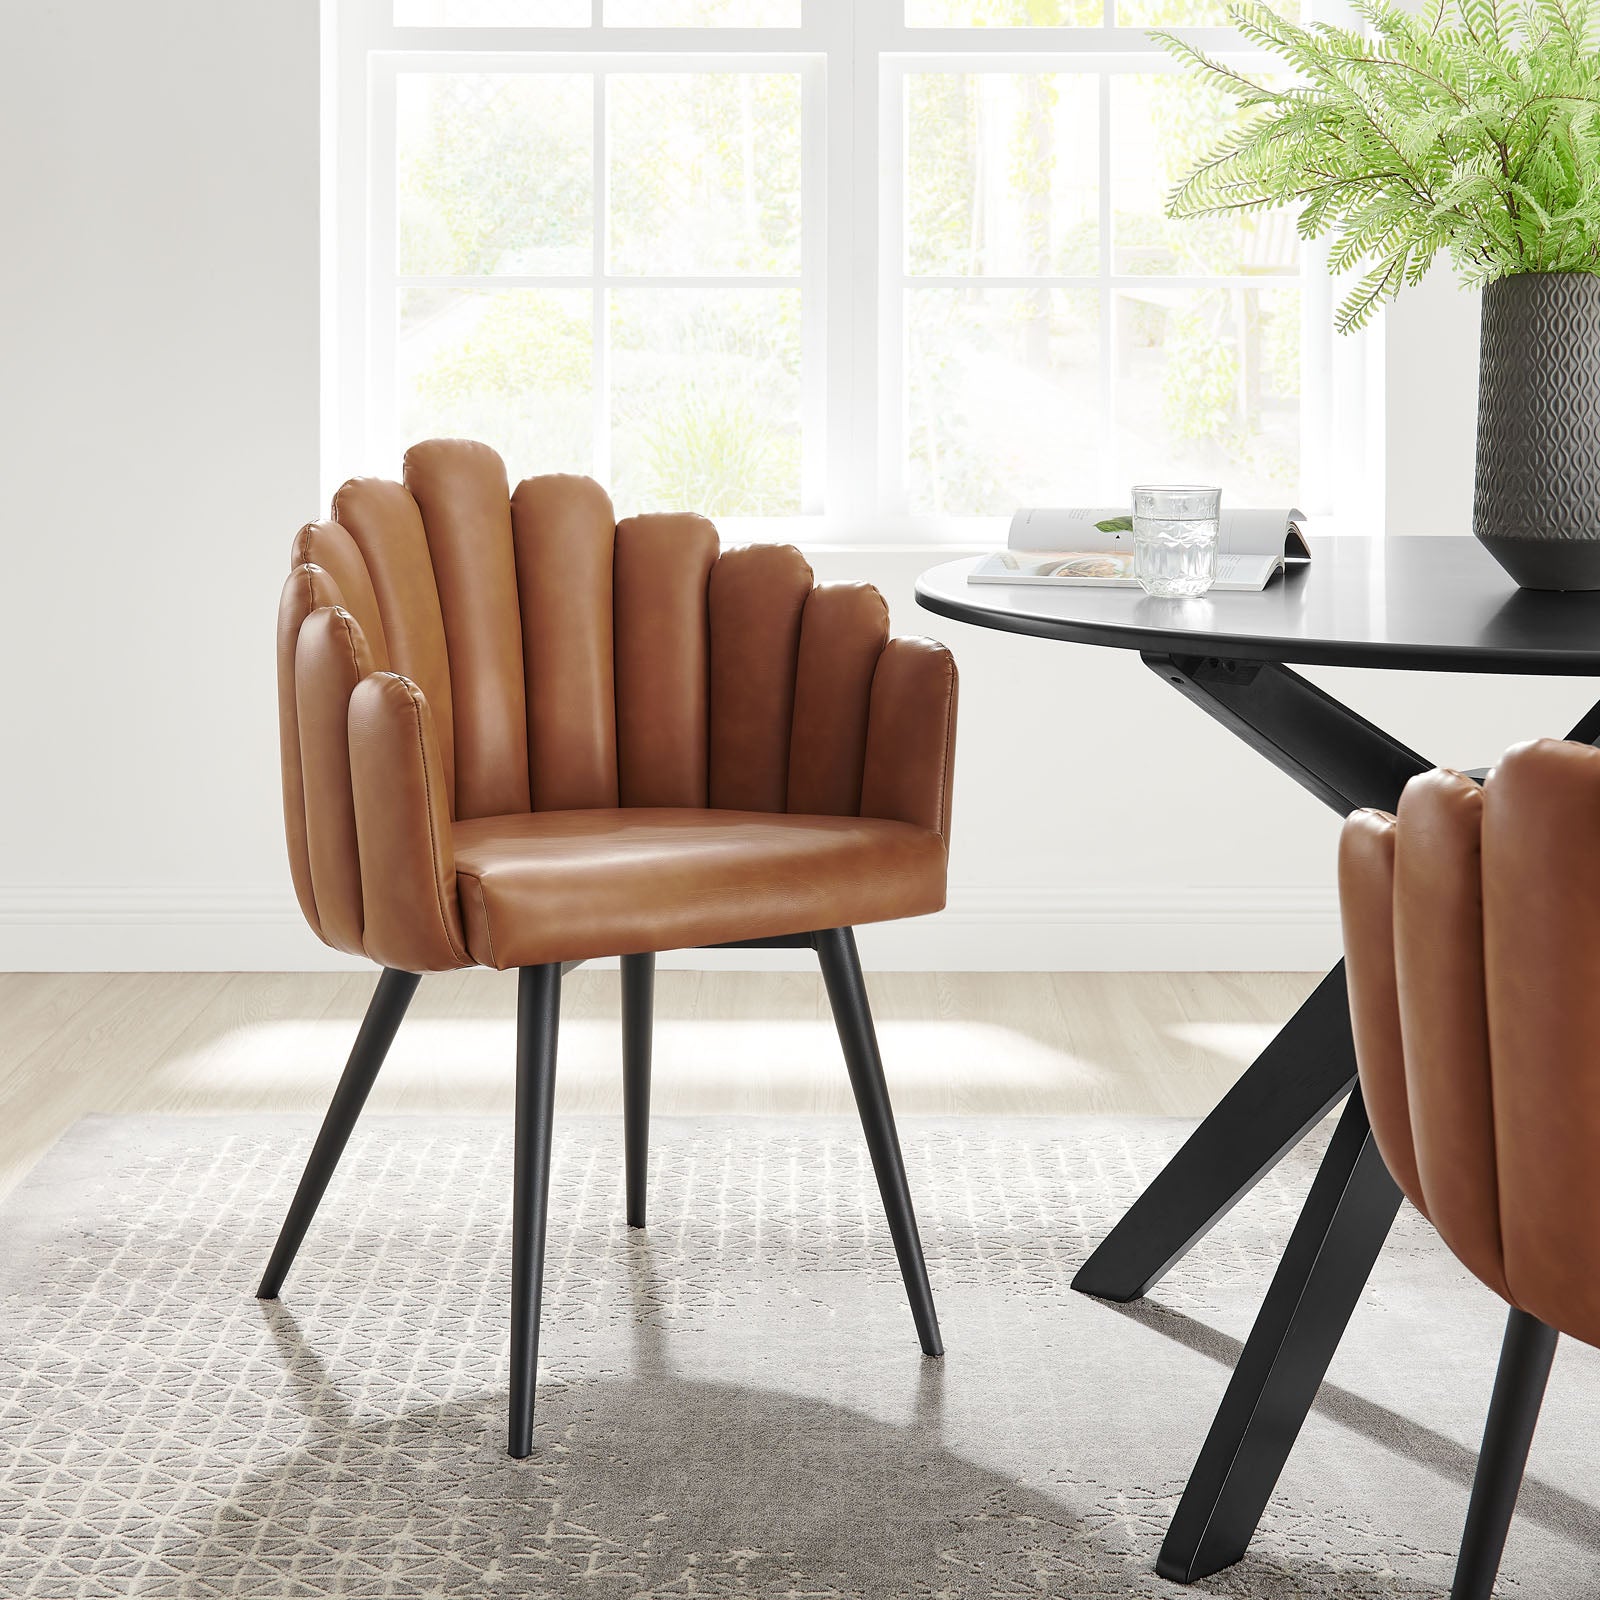 Vanguard Vegan Leather Dining Chair - East Shore Modern Home Furnishings